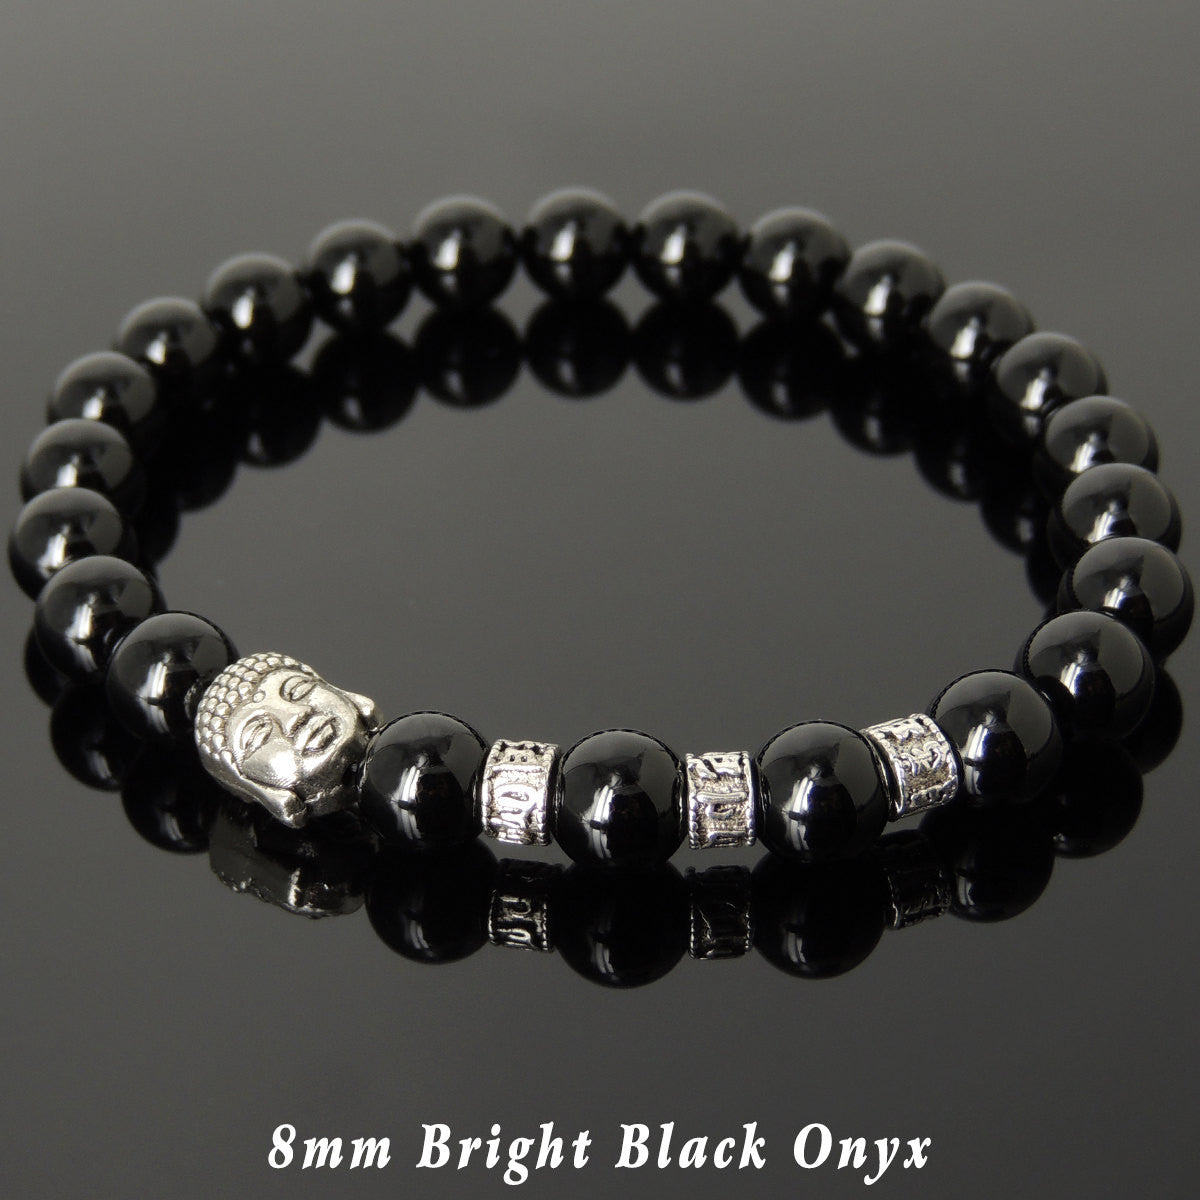 Bright Black Onyx Healing Gemstone Bracelet with Tibetan Silver Guayin Buddha & OM Meditation Spacer Beads - Handmade by Gem & Silver TSB324